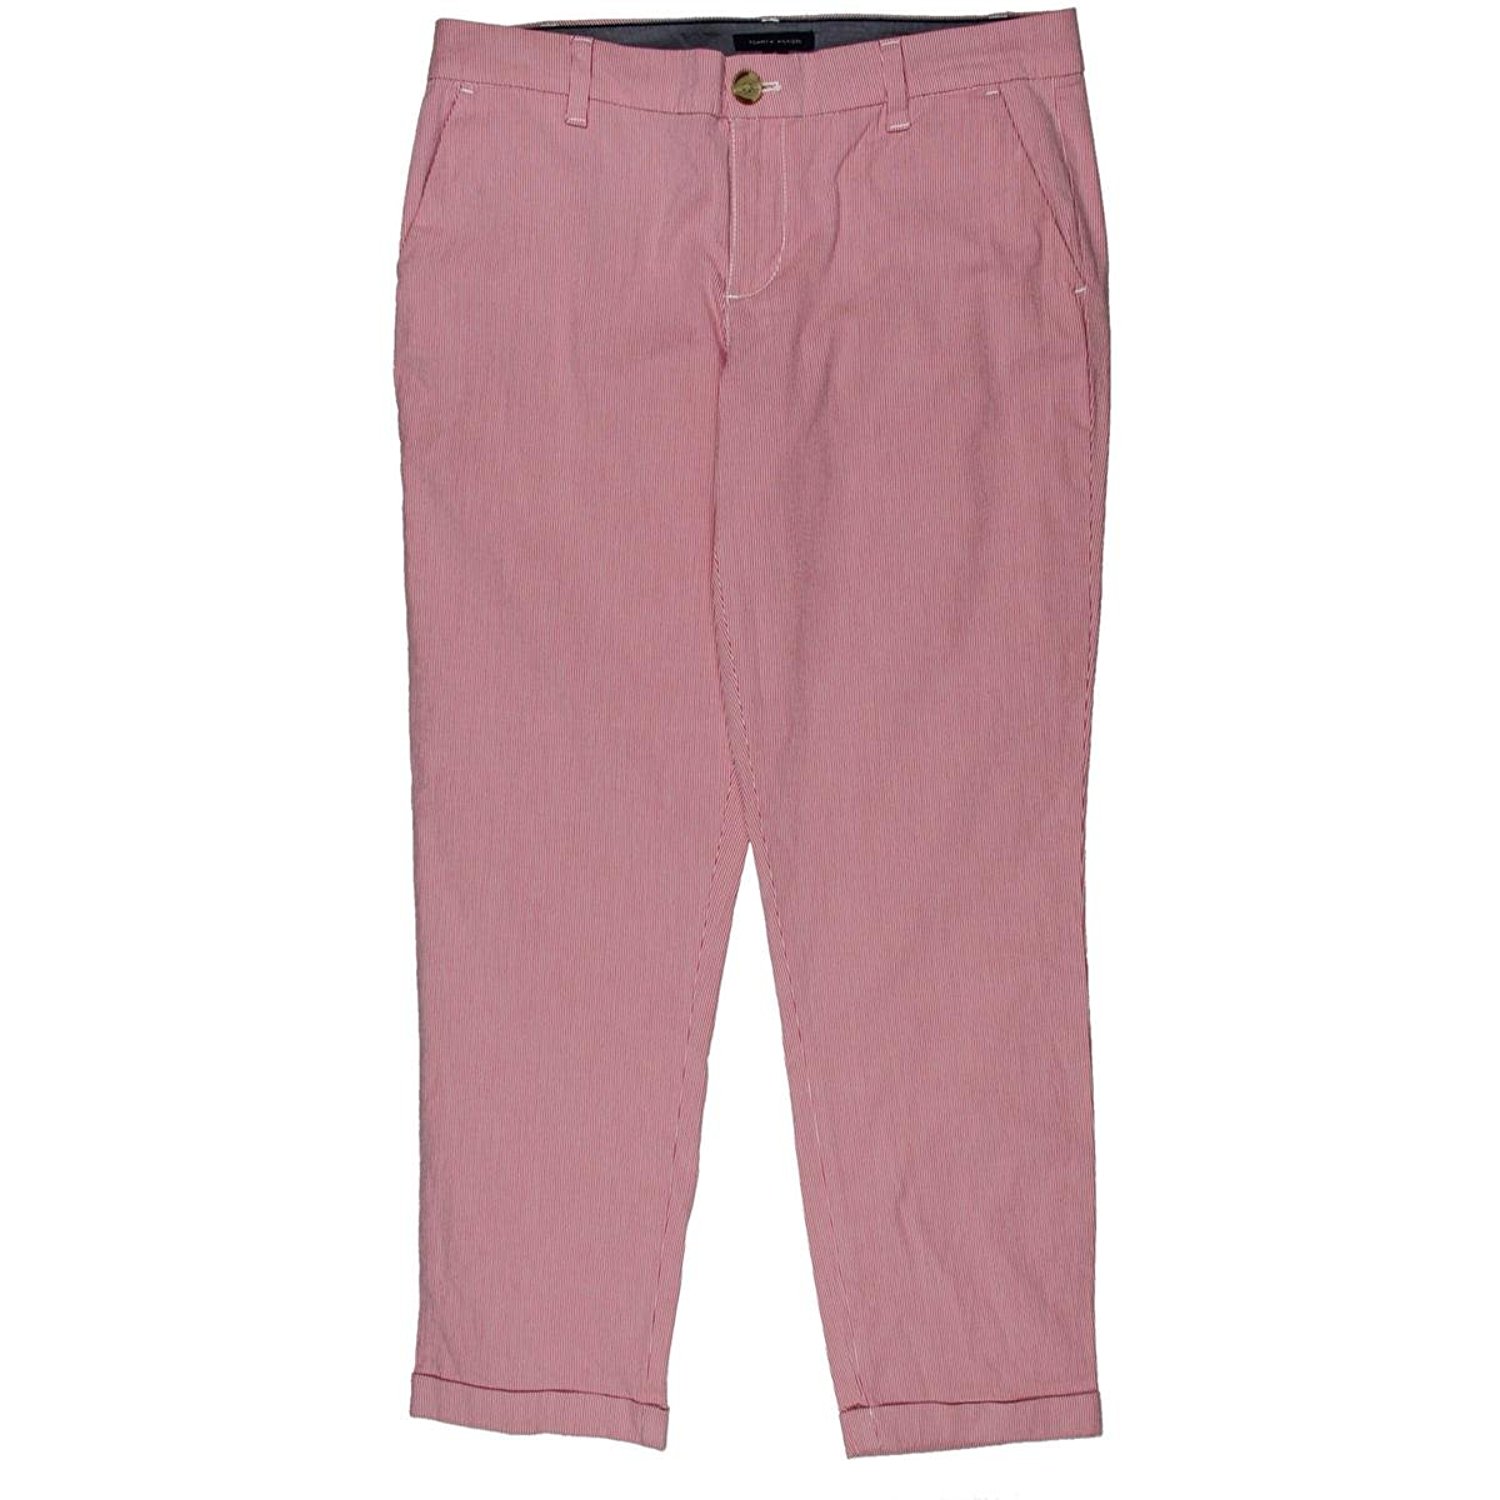 6964-2 Tommy Hilfiger Women's Cotton Blend Pants size 8 Pink $64.50 ...